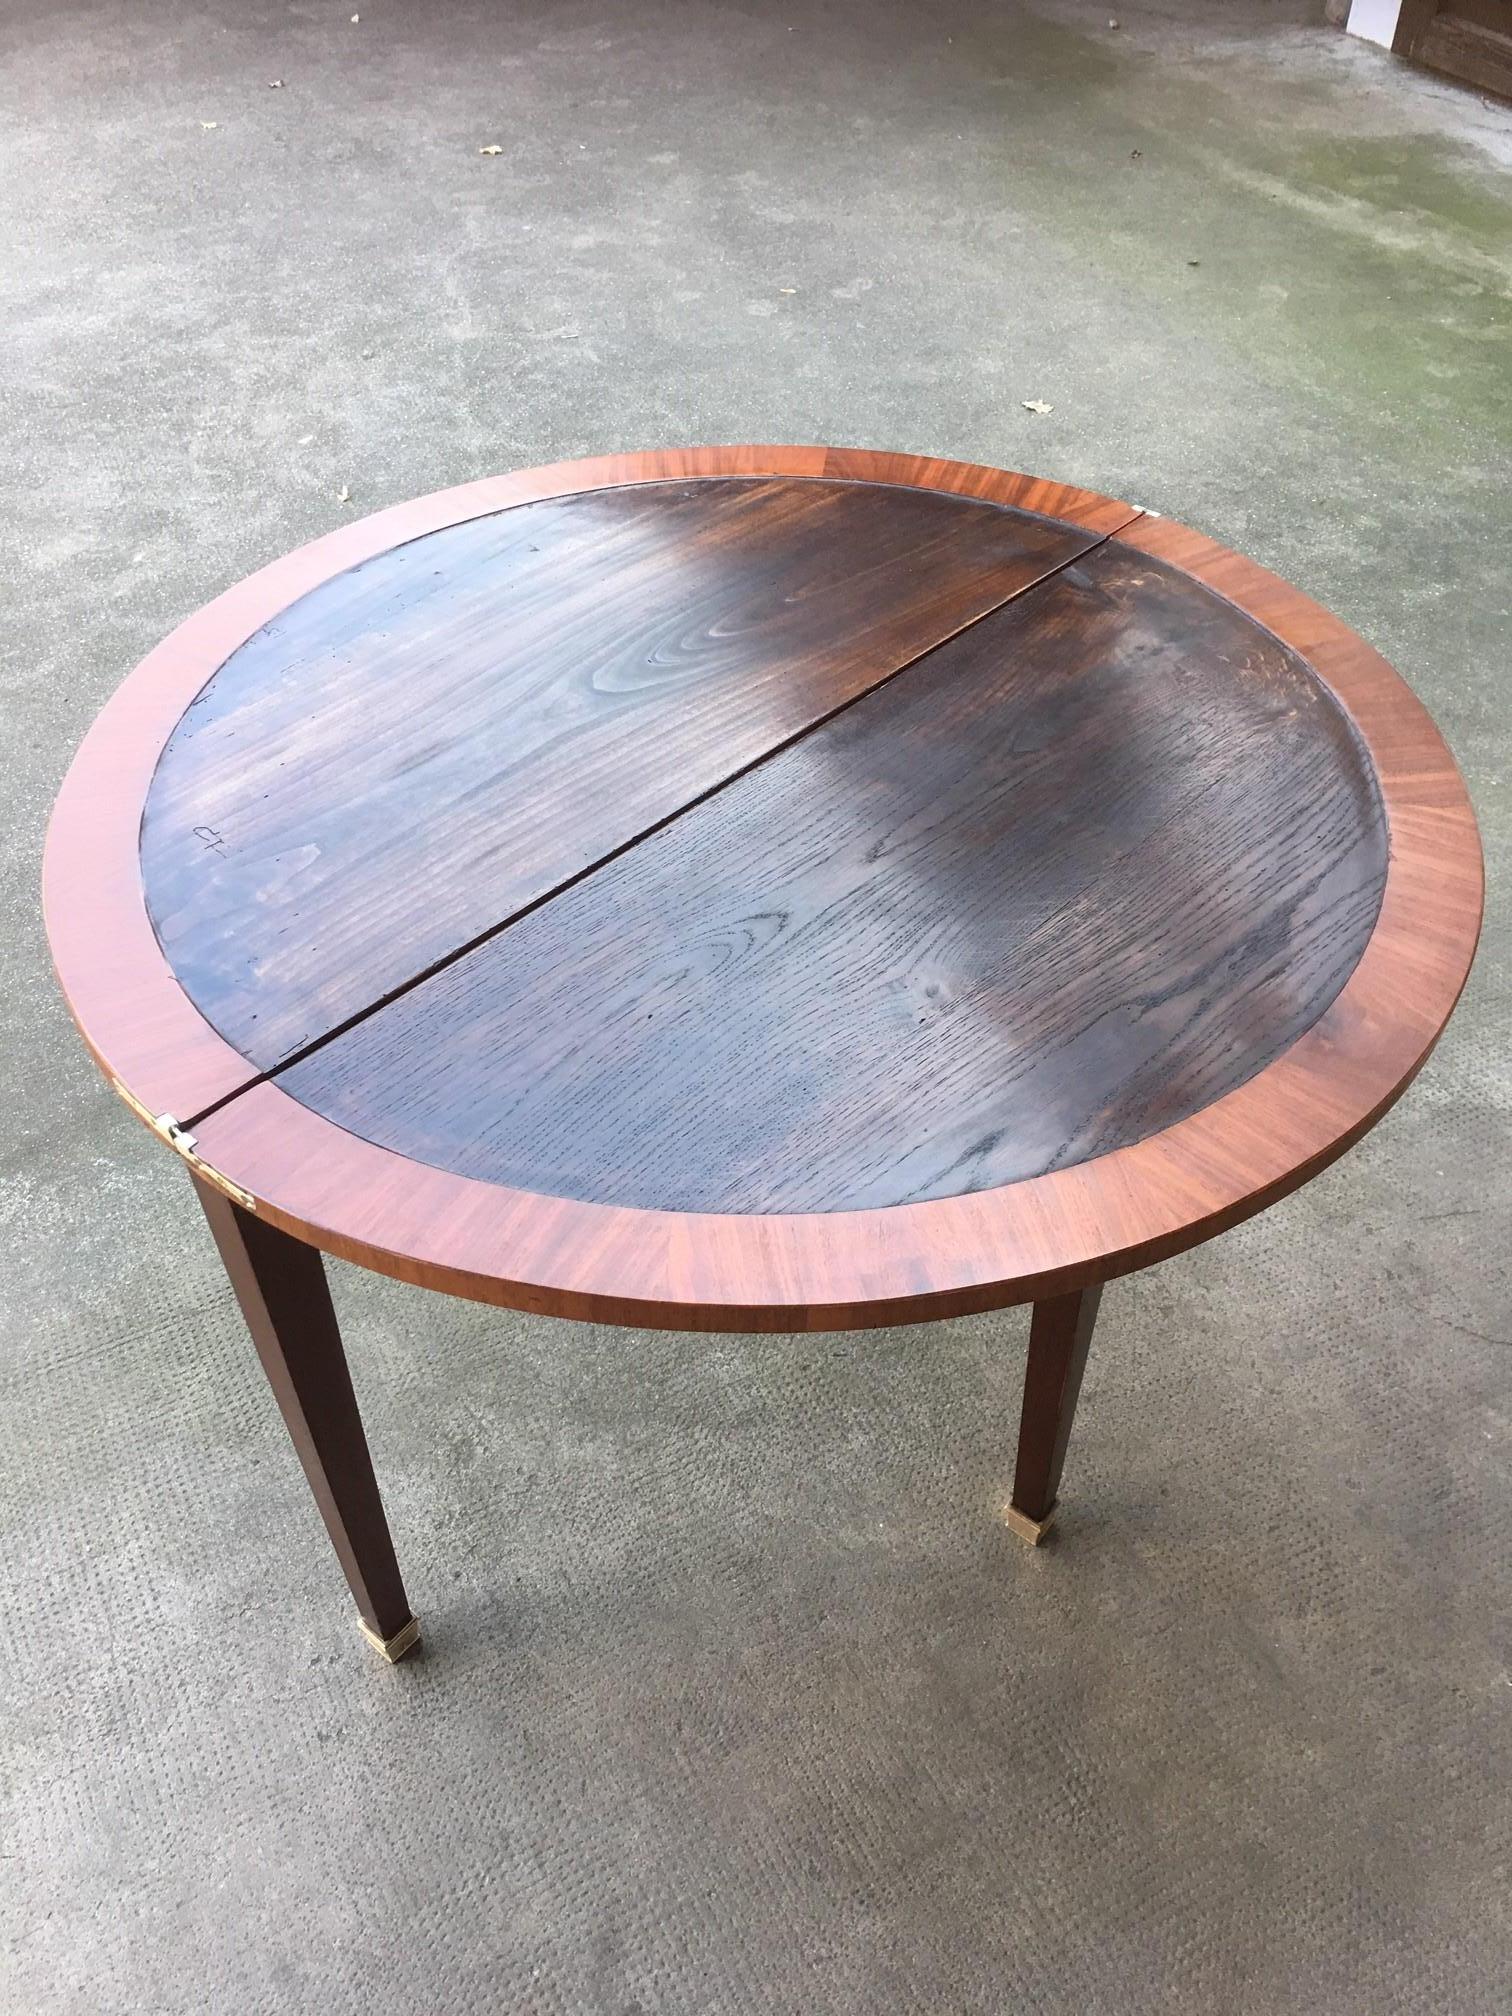 shellac table